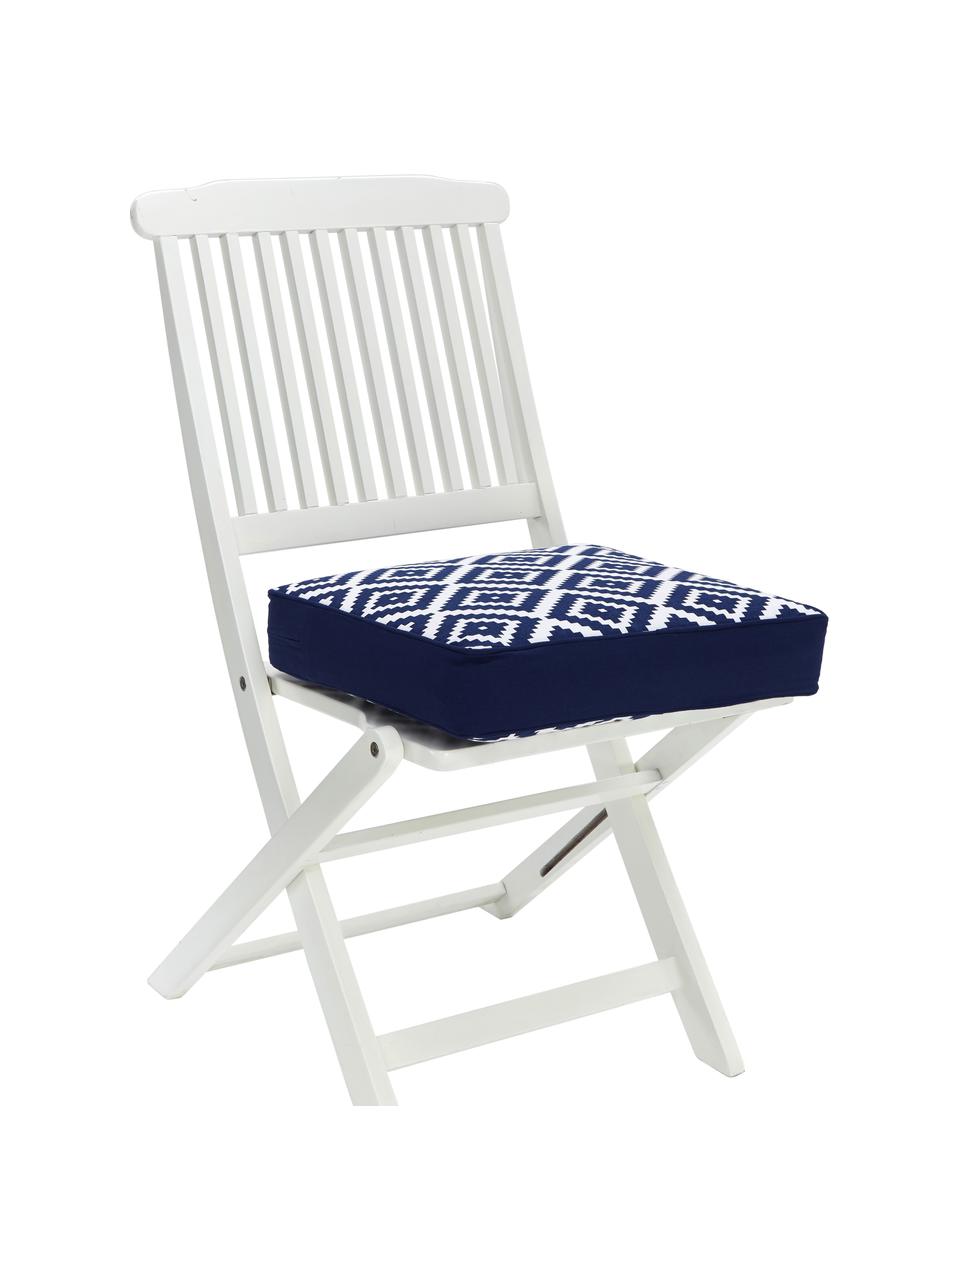 Hoog stoelkussen Miami in donkerblauw/wit, Blauw, B 40 x L 40 cm